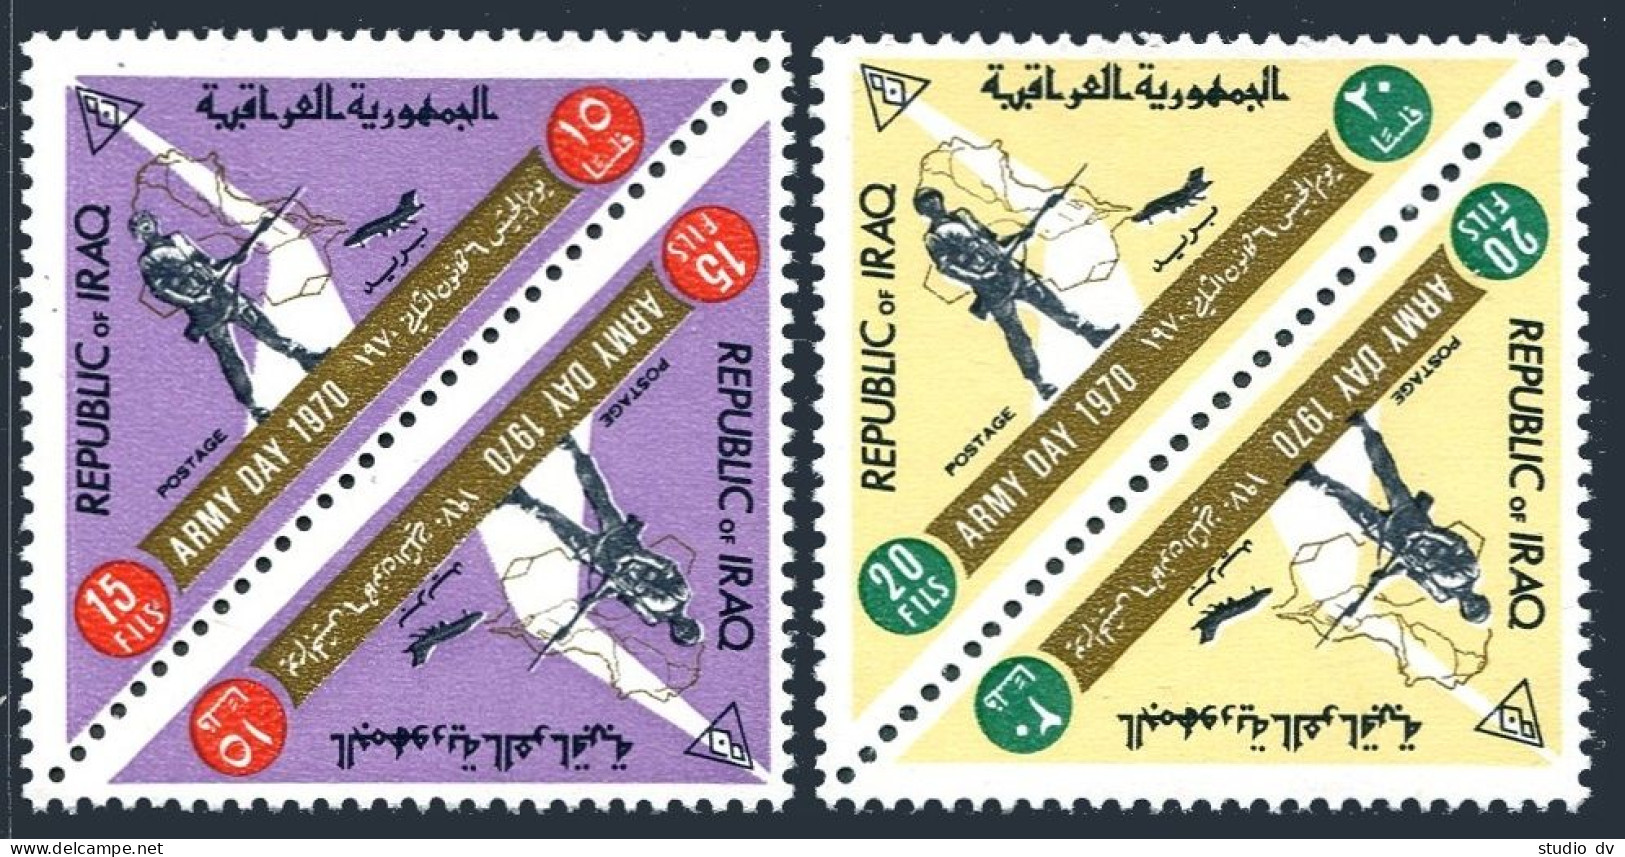 Iraq 522-523 Tete-beche, MNH. Michel 585-586. Army Day 1970. Soldier, Map,Plane. - Irak